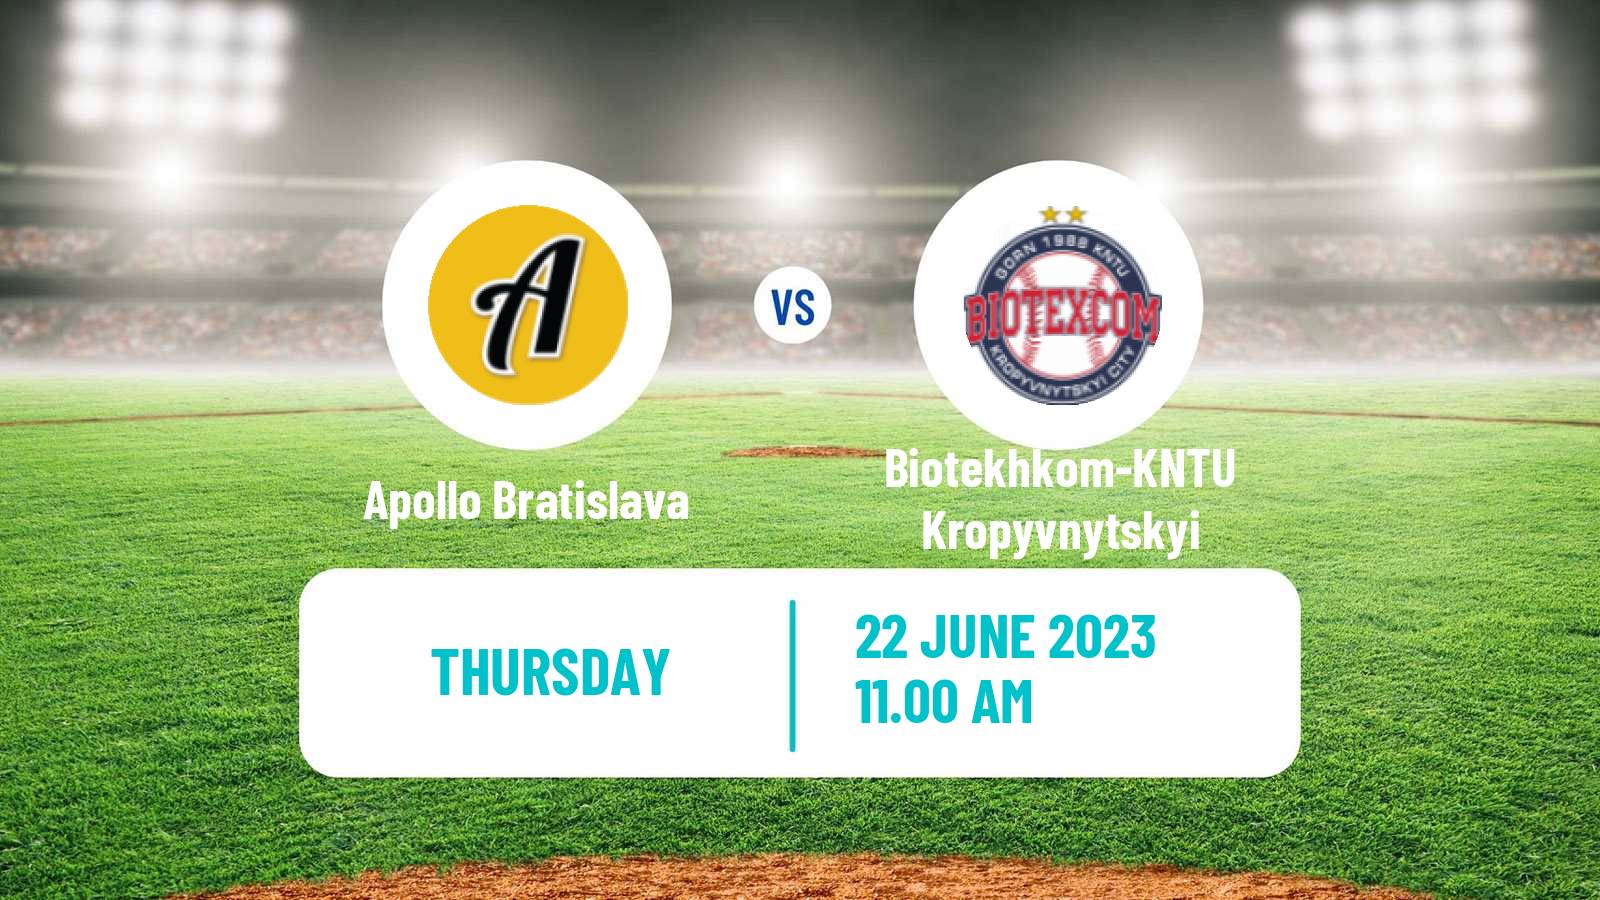 Baseball  Federations Cup Baseball Apollo Bratislava - Biotekhkom-KNTU Kropyvnytskyi